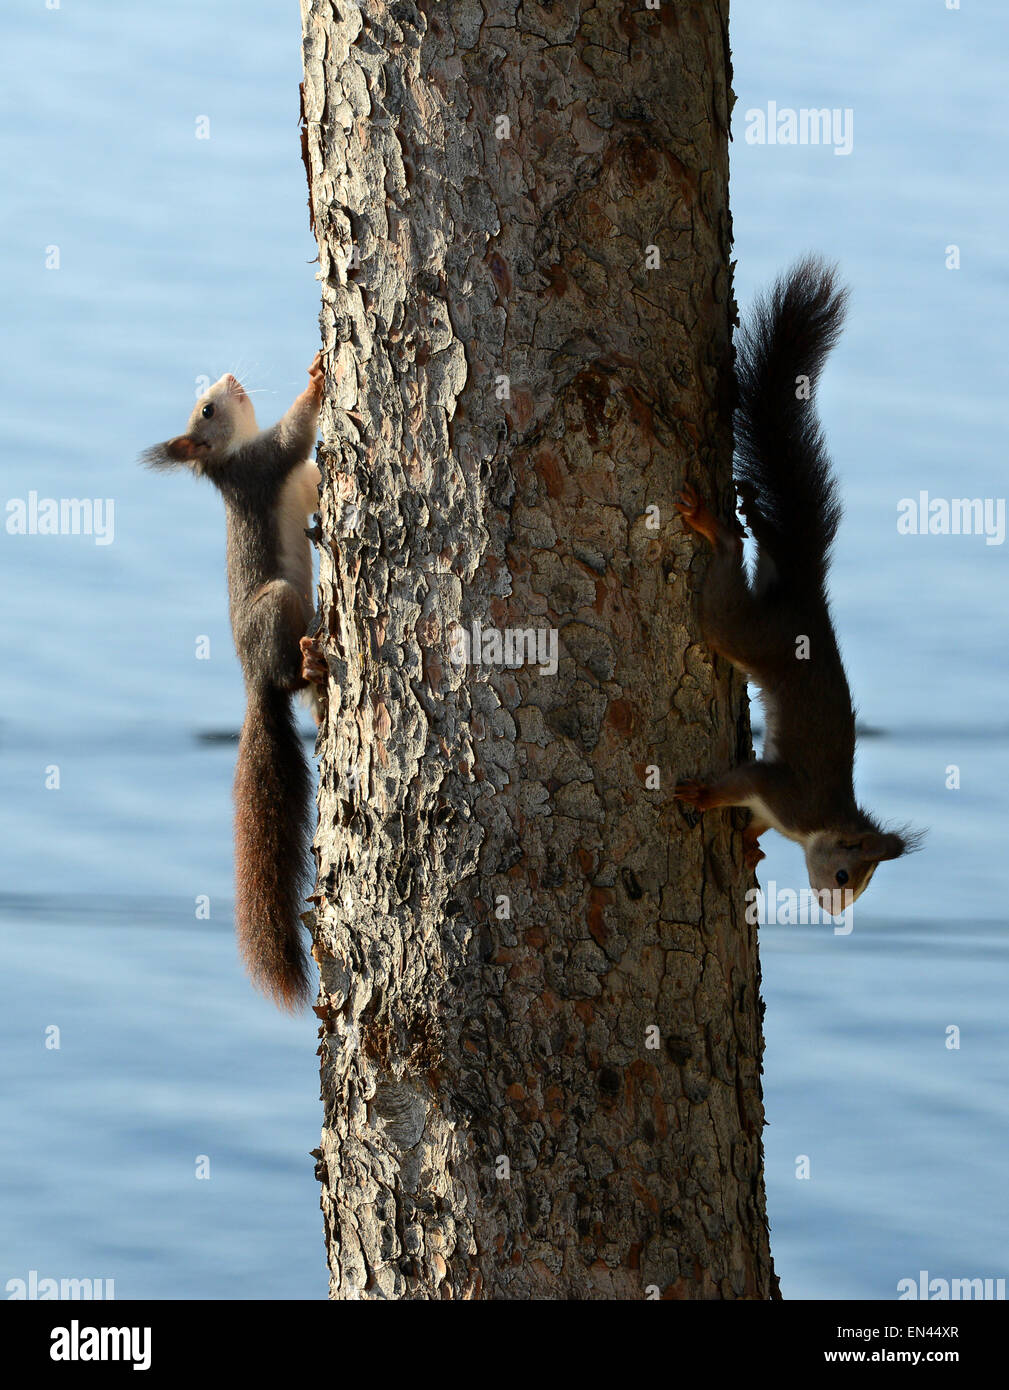 European red squirrel squirrels climbing tree in Costa del Sol Spain Spanish Stock Photo